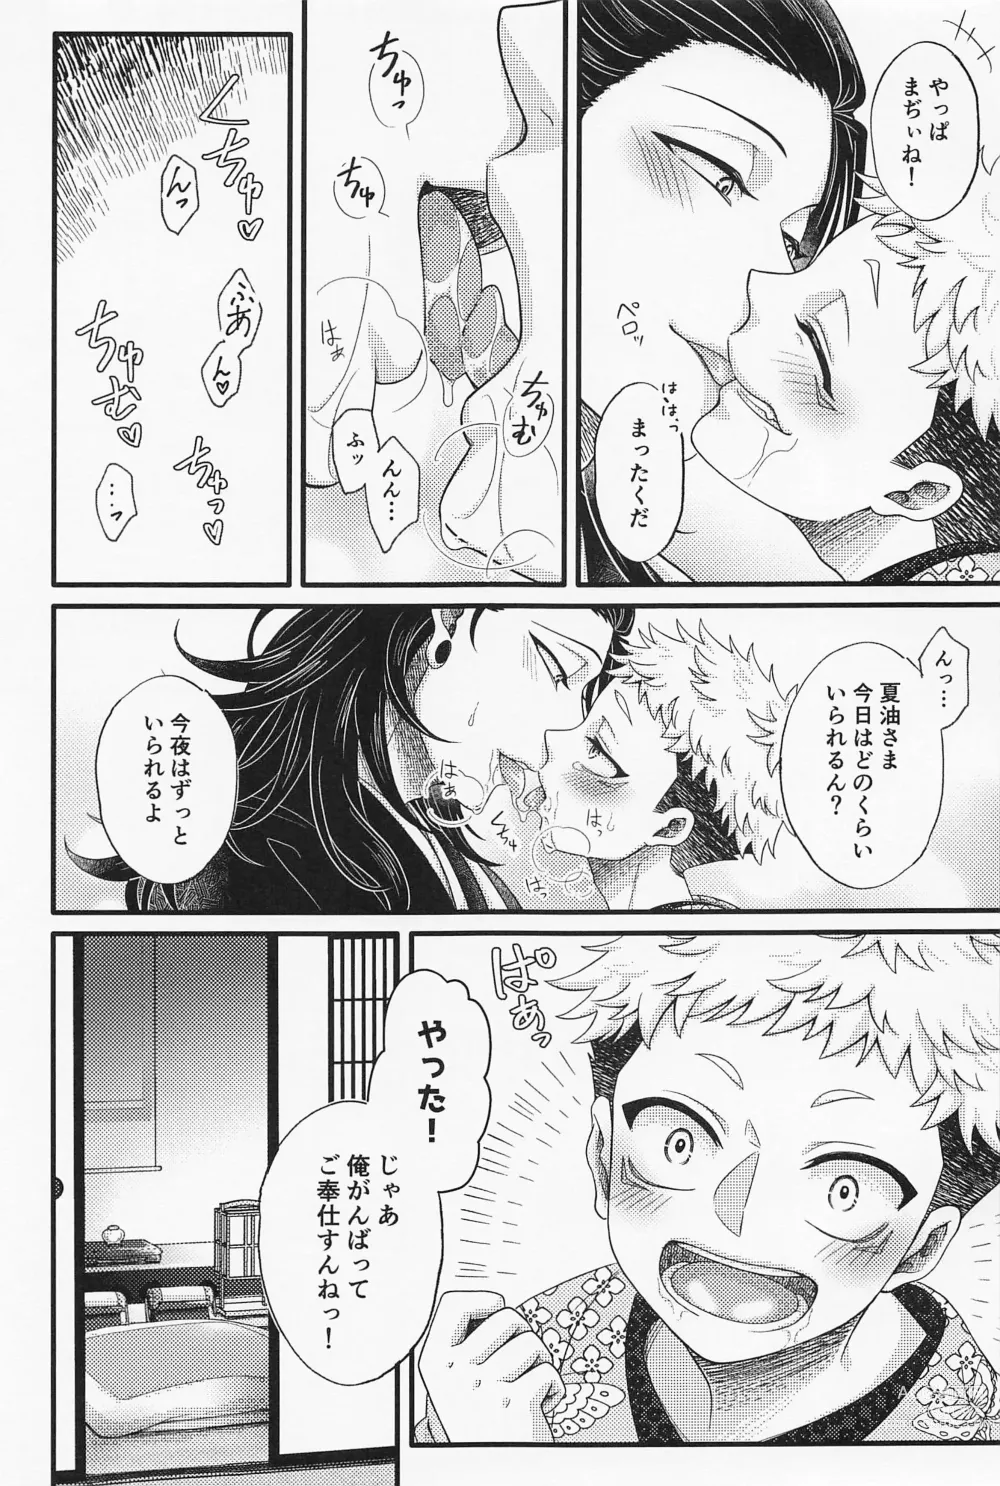 Page 6 of doujinshi Tamayura no.